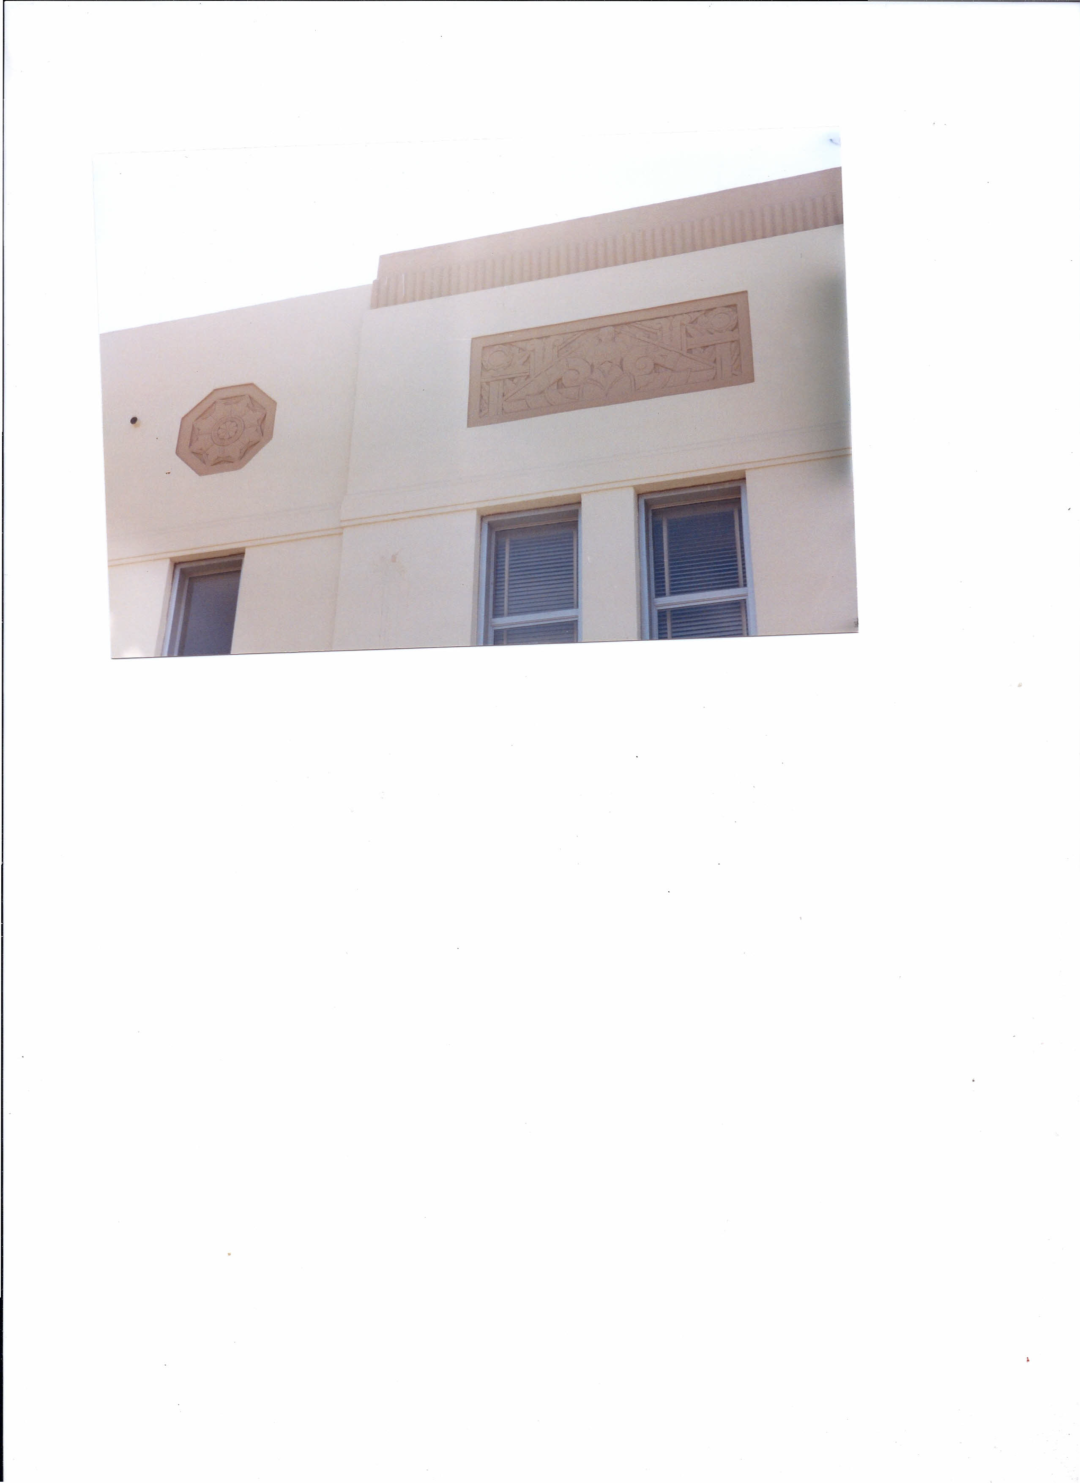 Frances E. Willard Elementary School Architectural Bas Reliefs